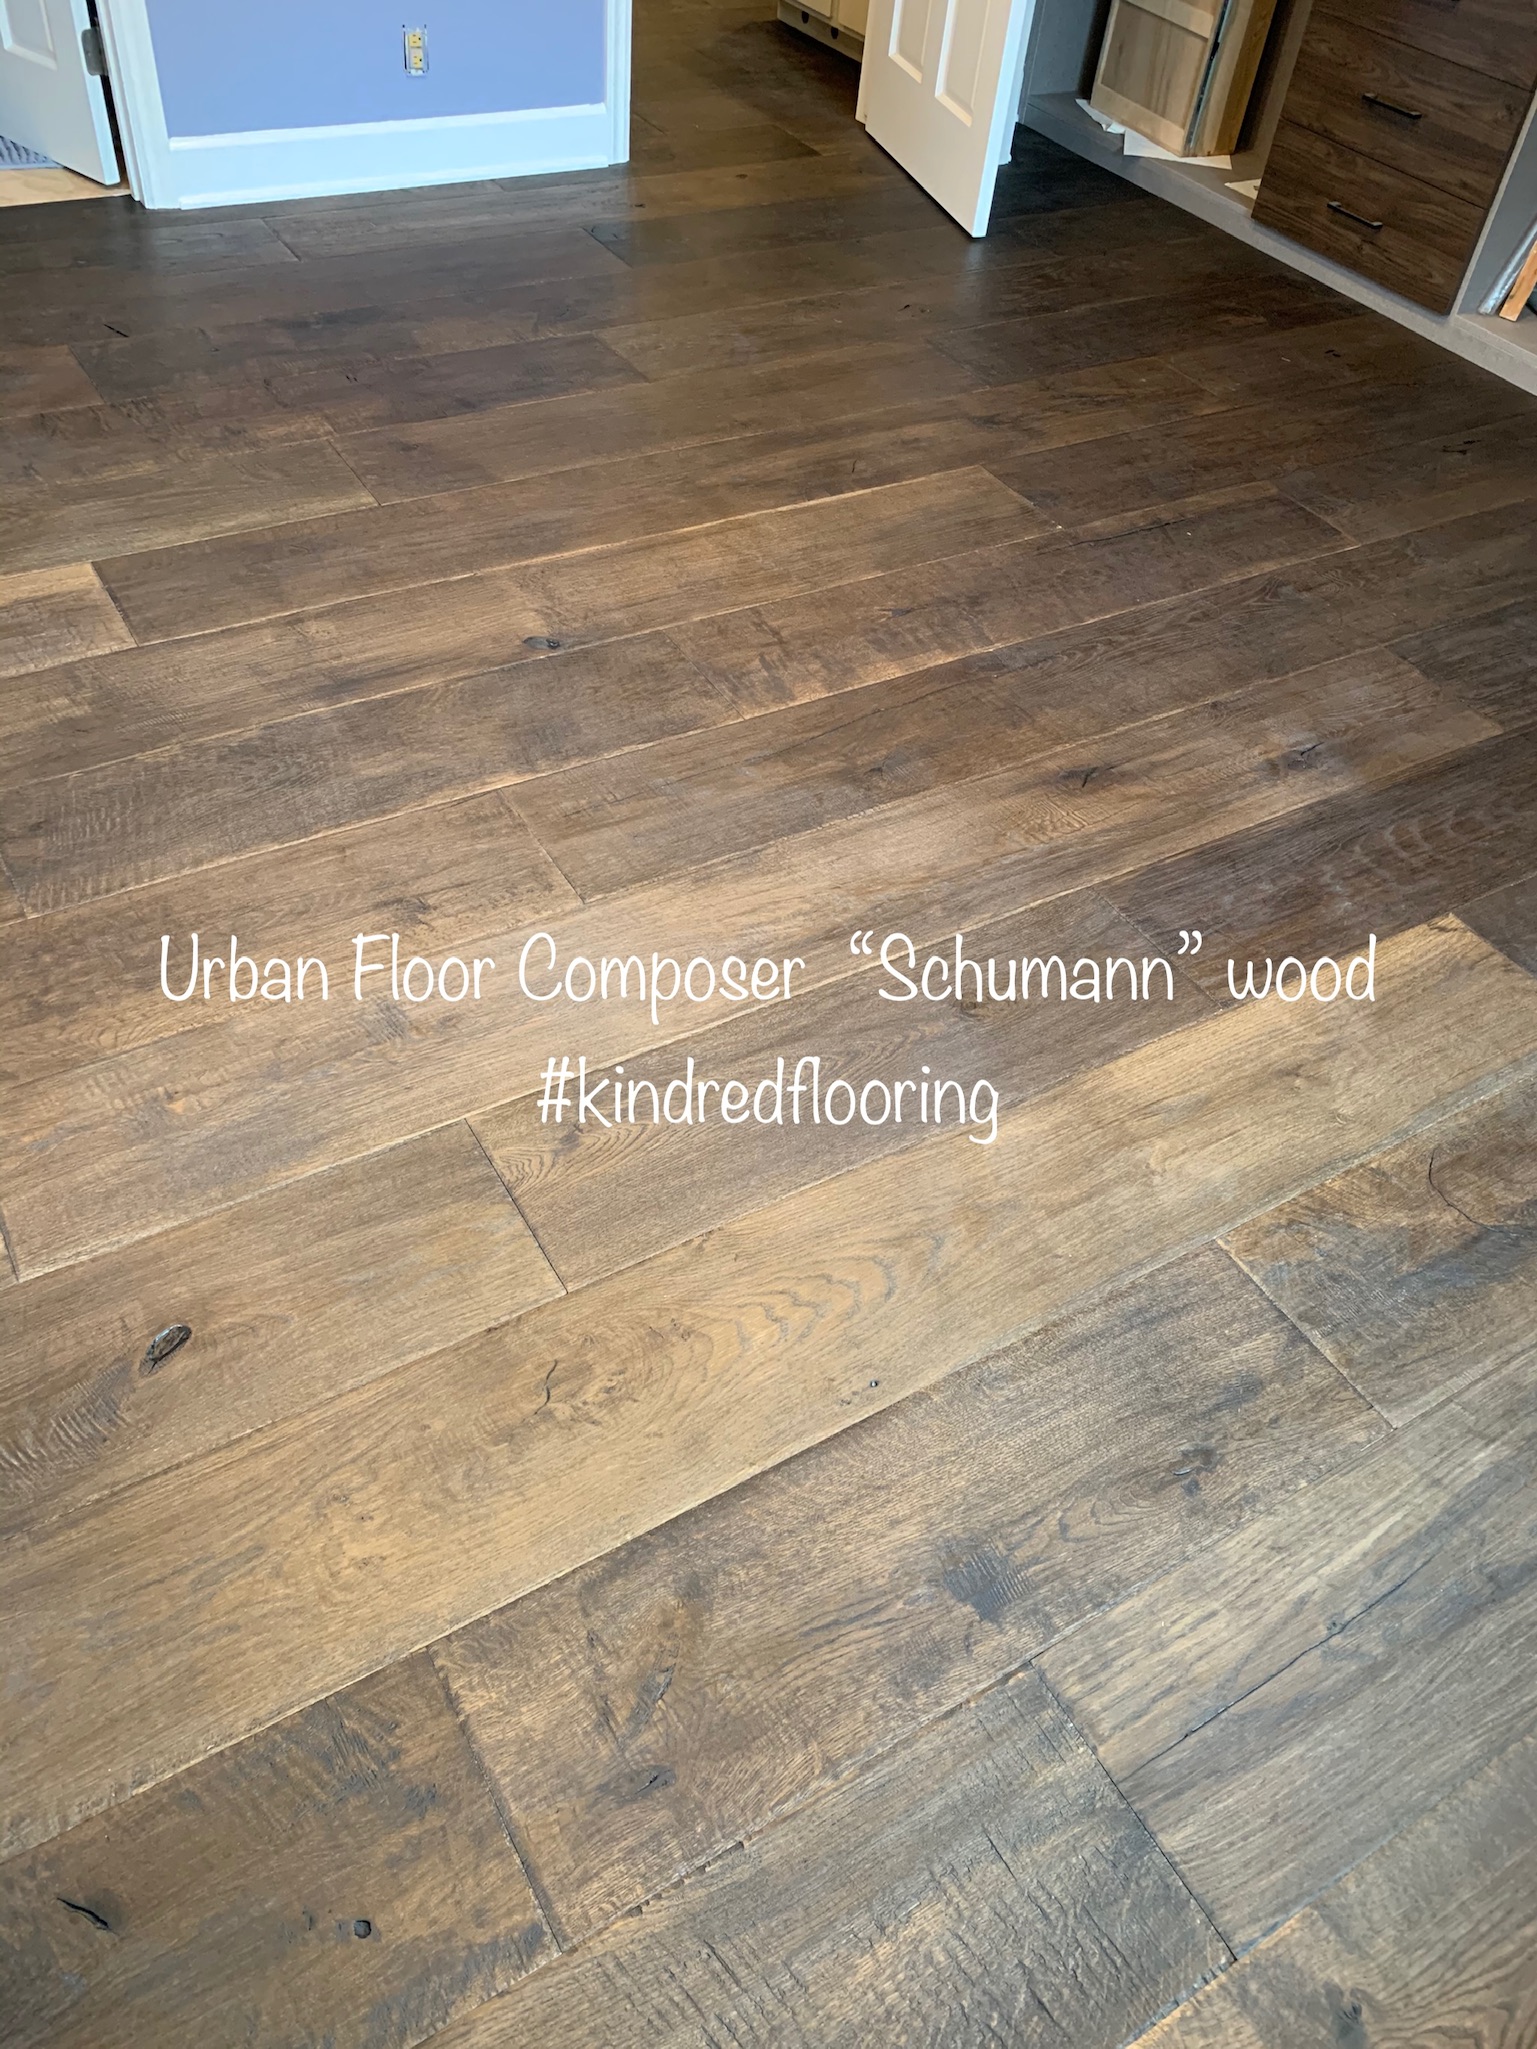 Urban Floor Composer "Schumann"